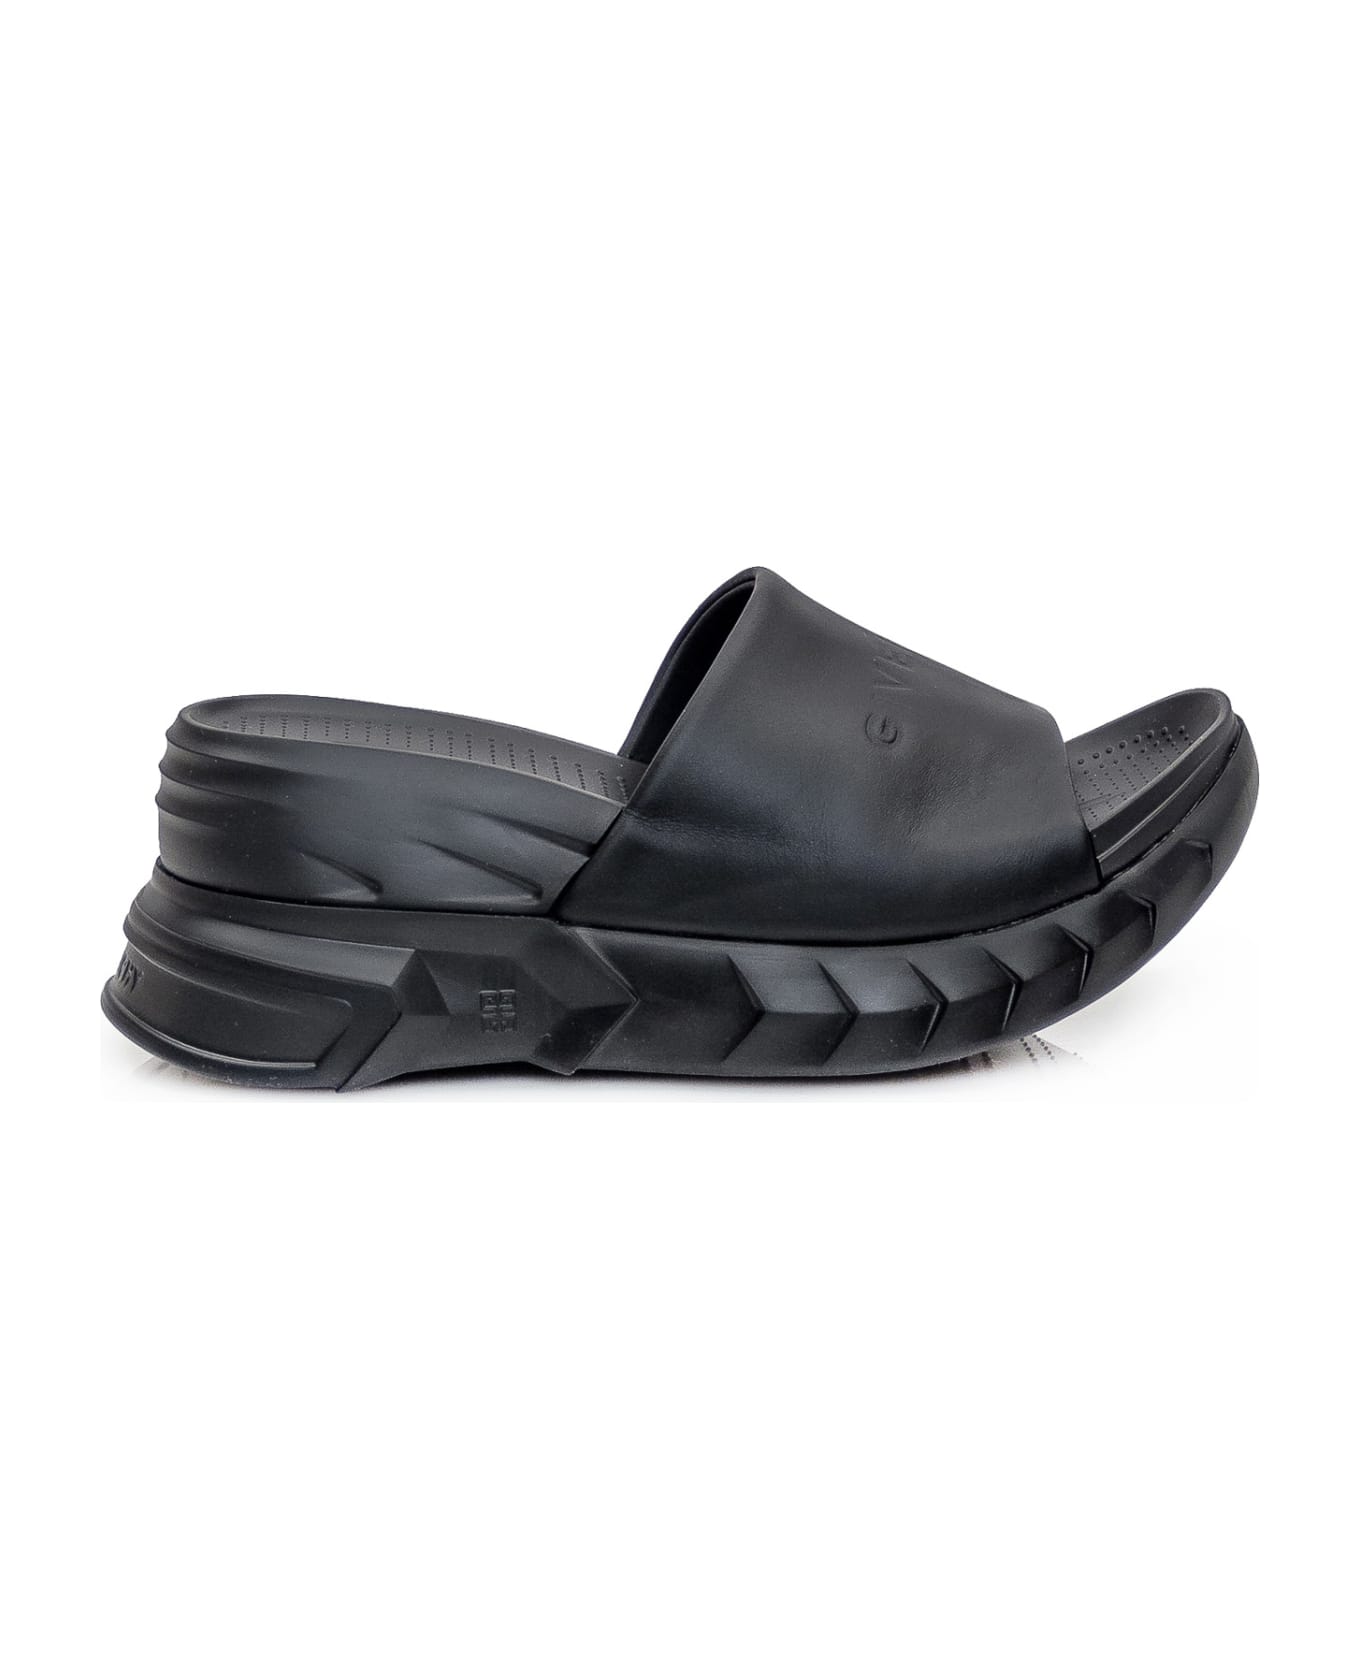 Givenchy Marshmallow Sandal - BLACK